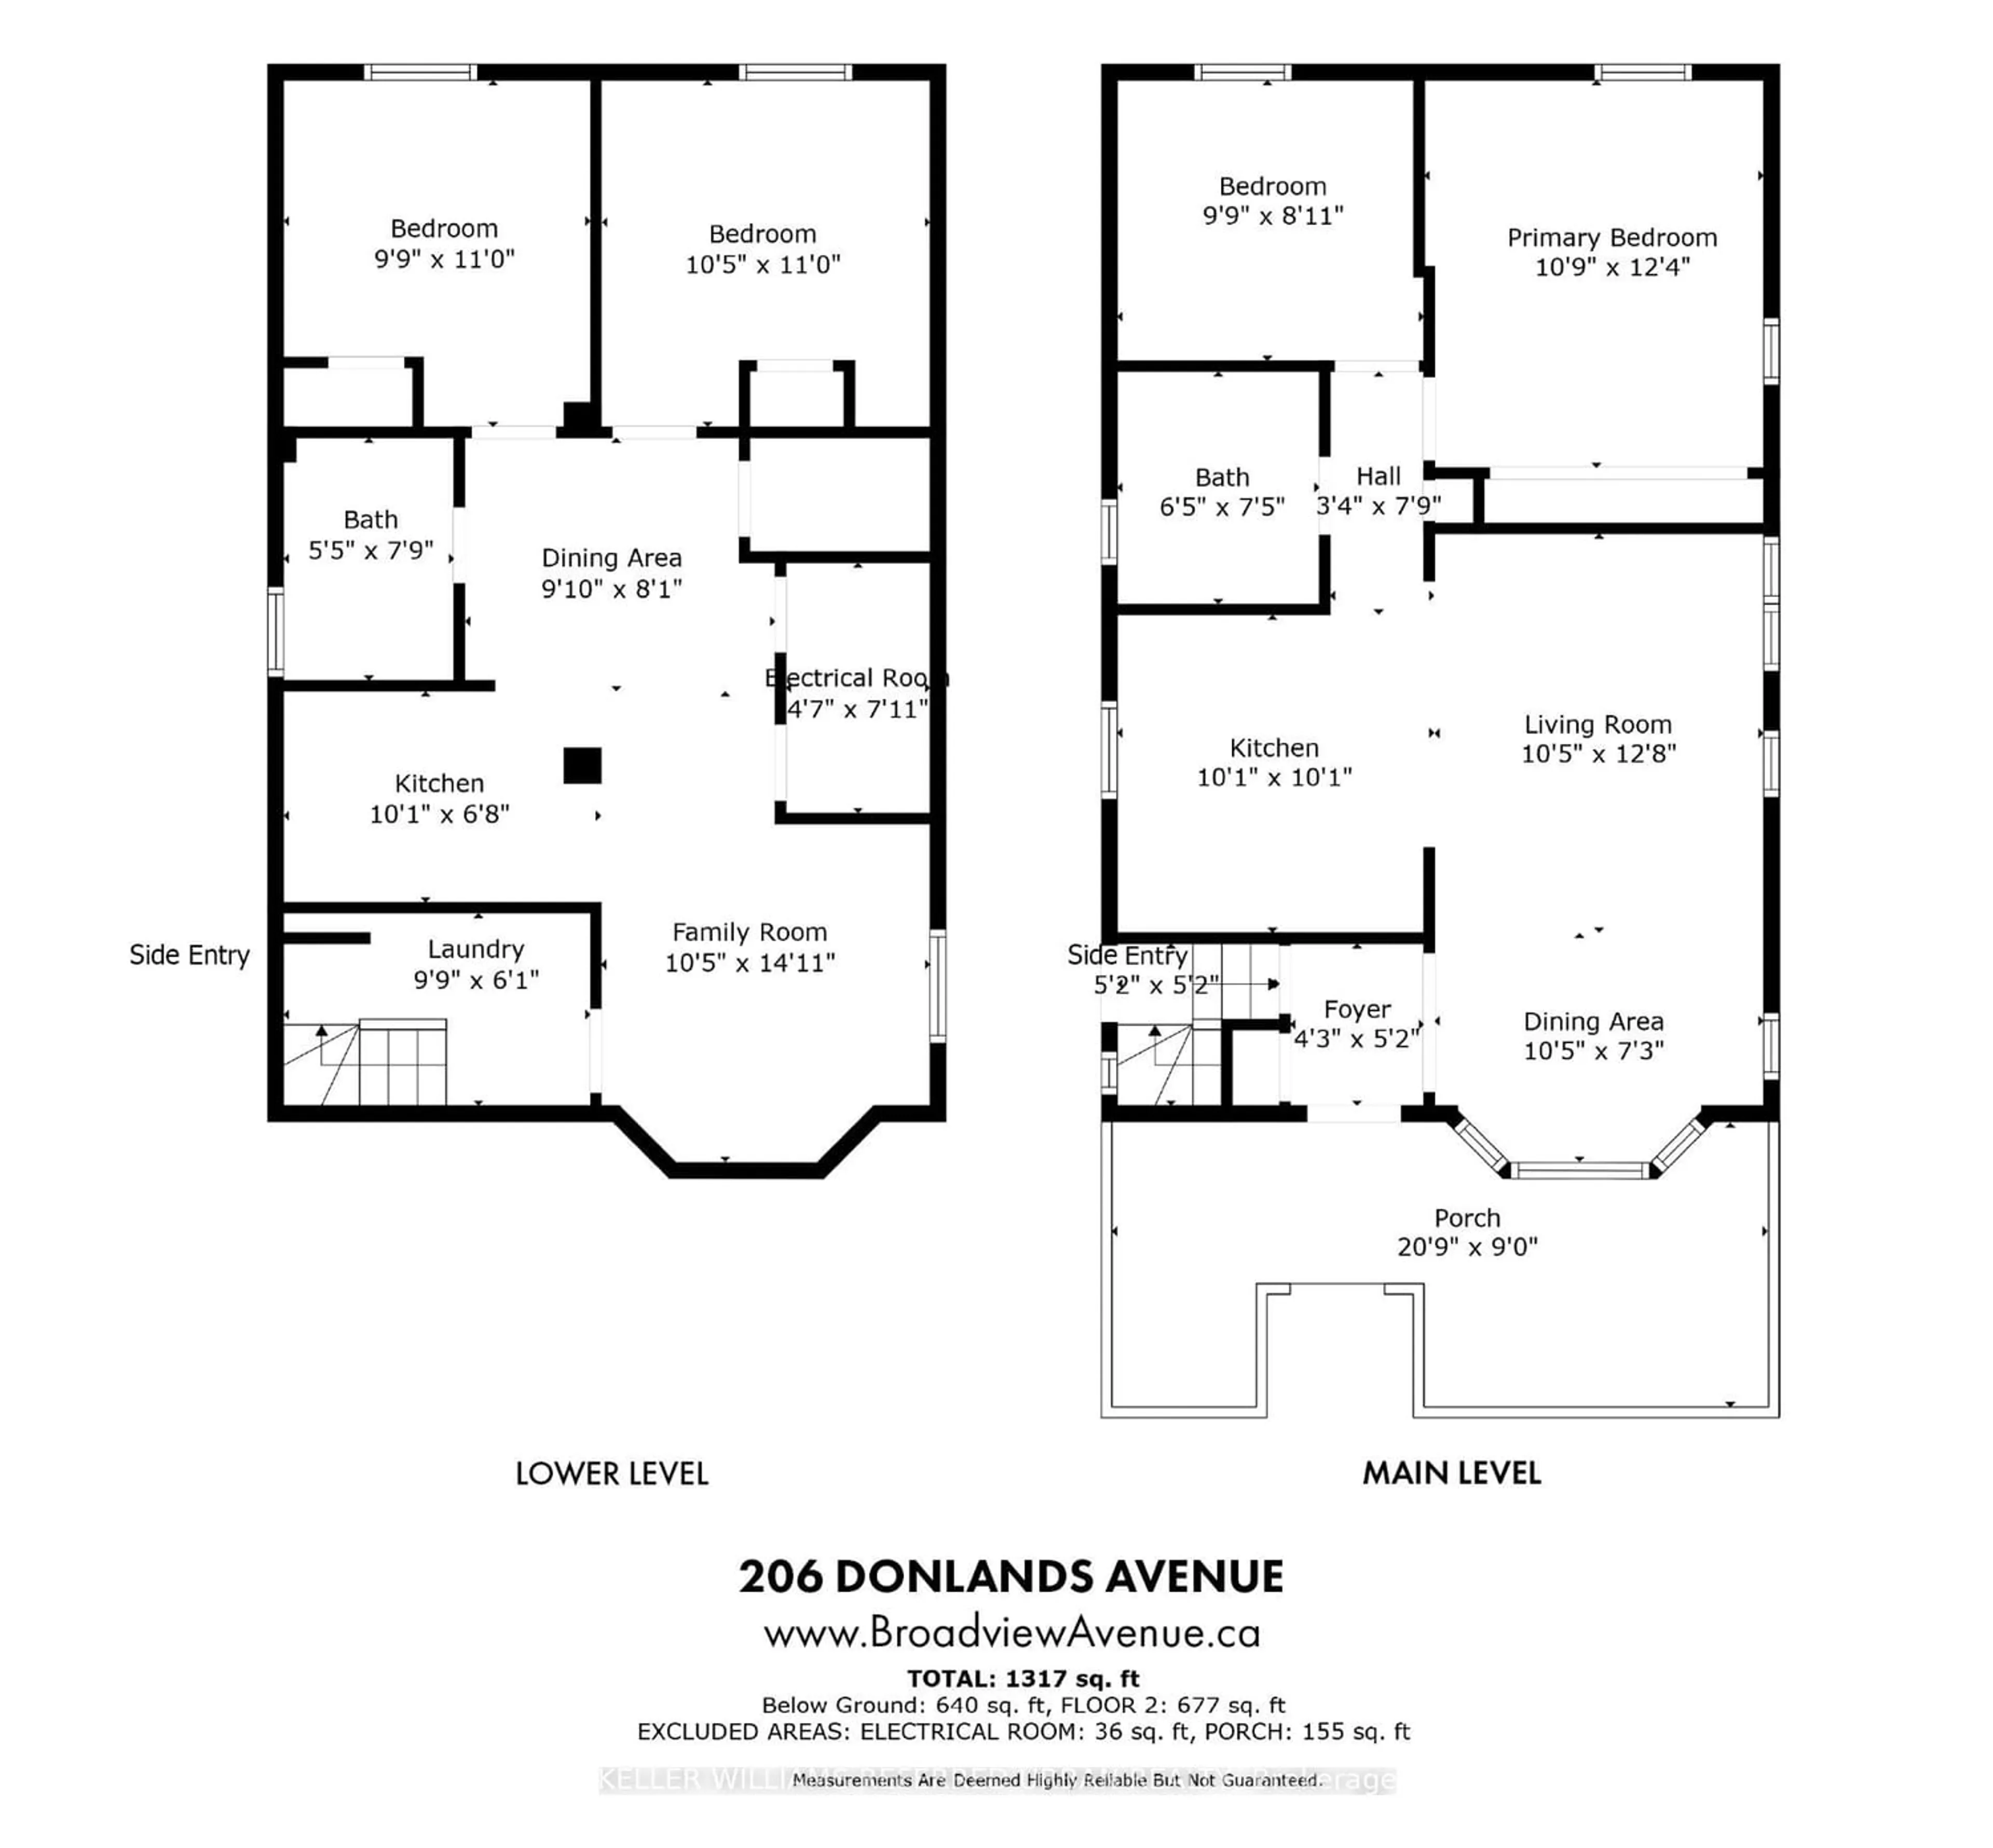 Floor plan for 206 Donlands Ave, Toronto Ontario M4J 3R1